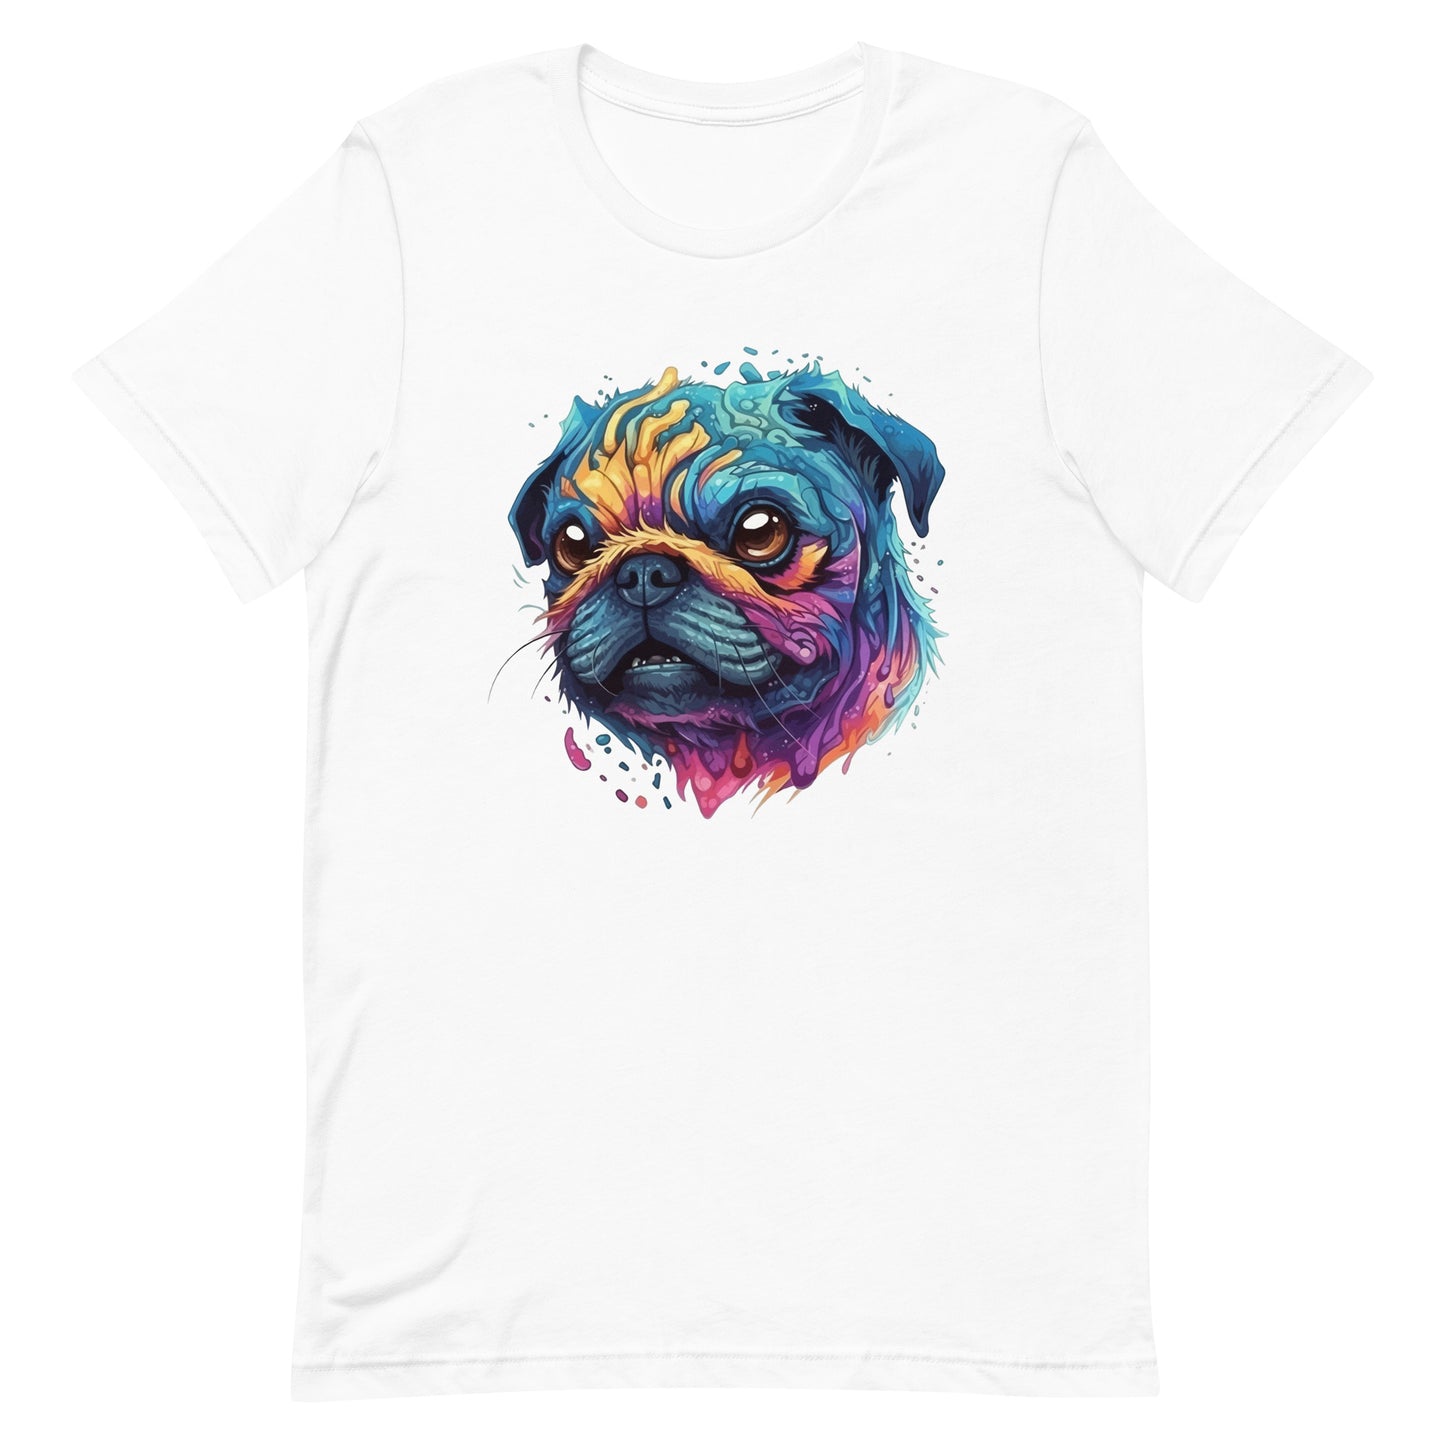 Alien colorful pug, Fantastic animals, Pug illustration, Fantasy art portrait of dog - Unisex t-shirt